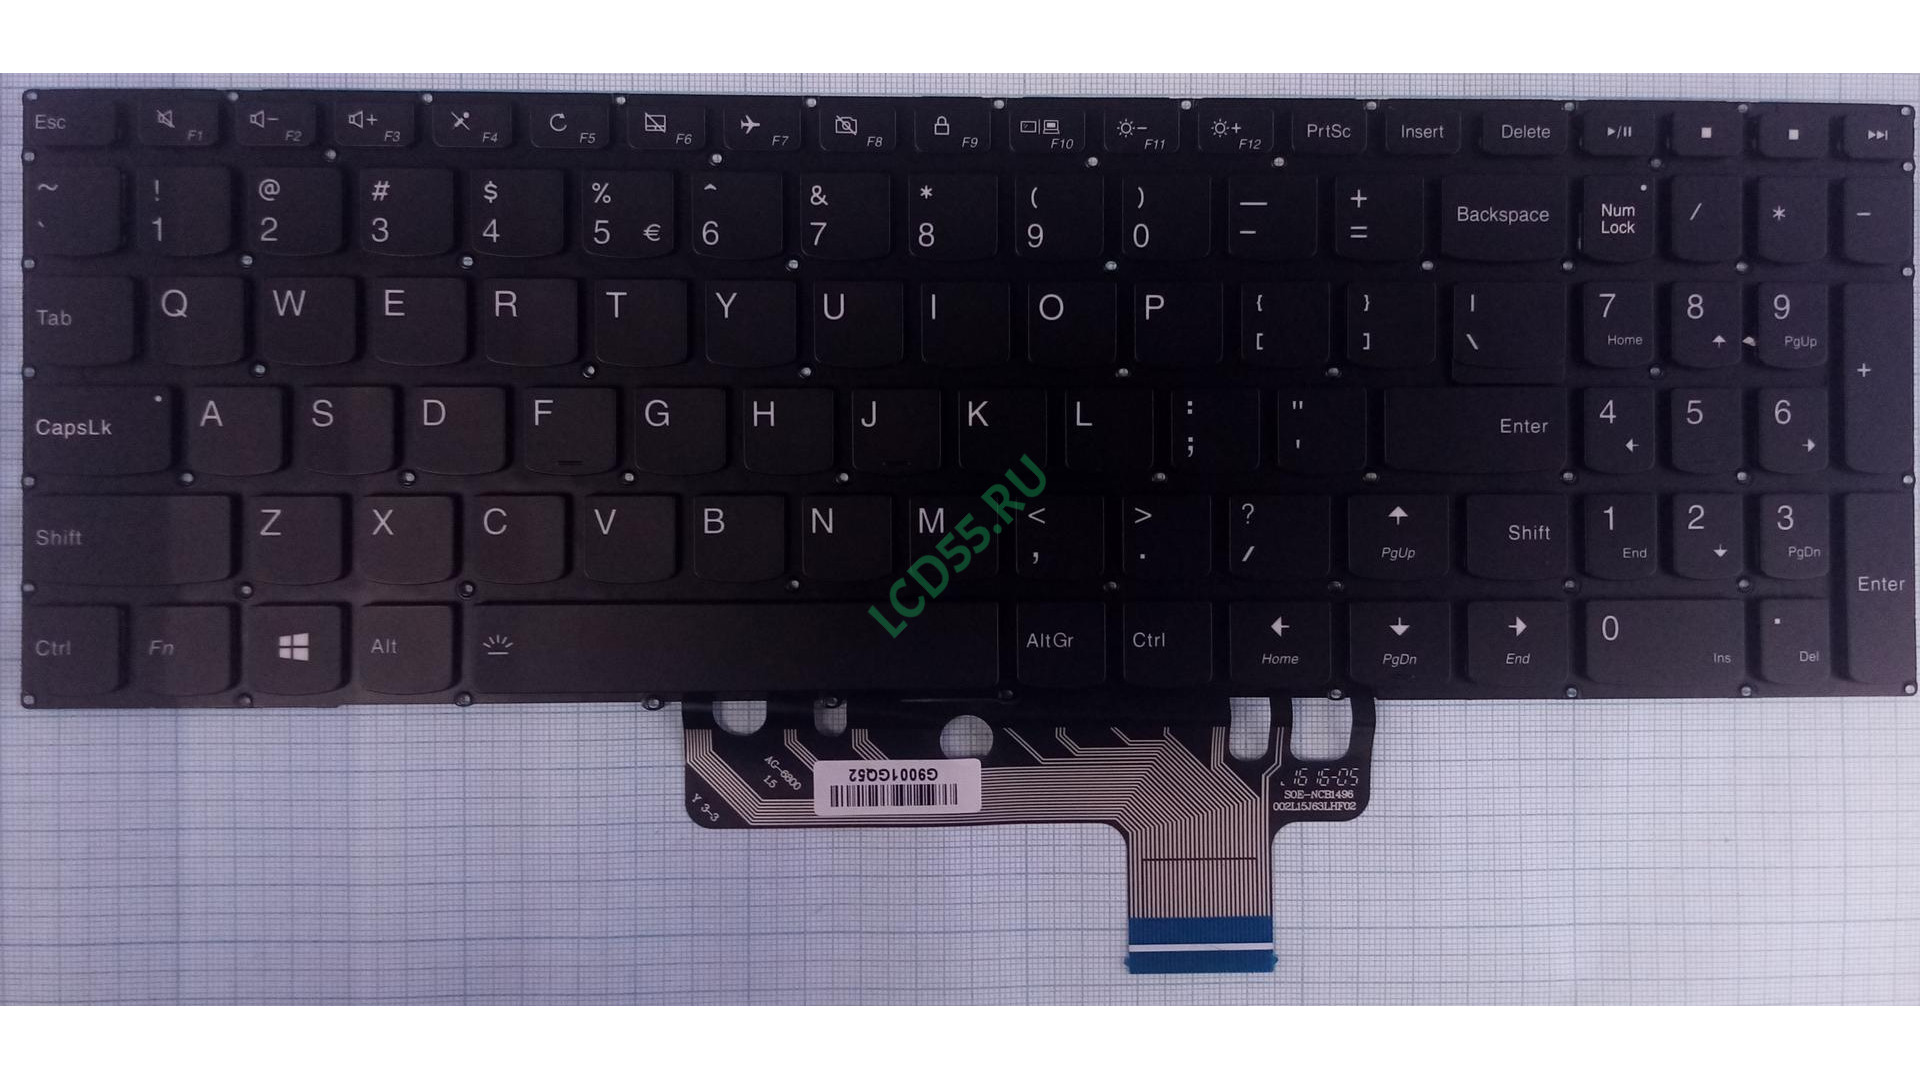 Клавиатура Lenovo Yoga 510-15IKB 510-15ISK